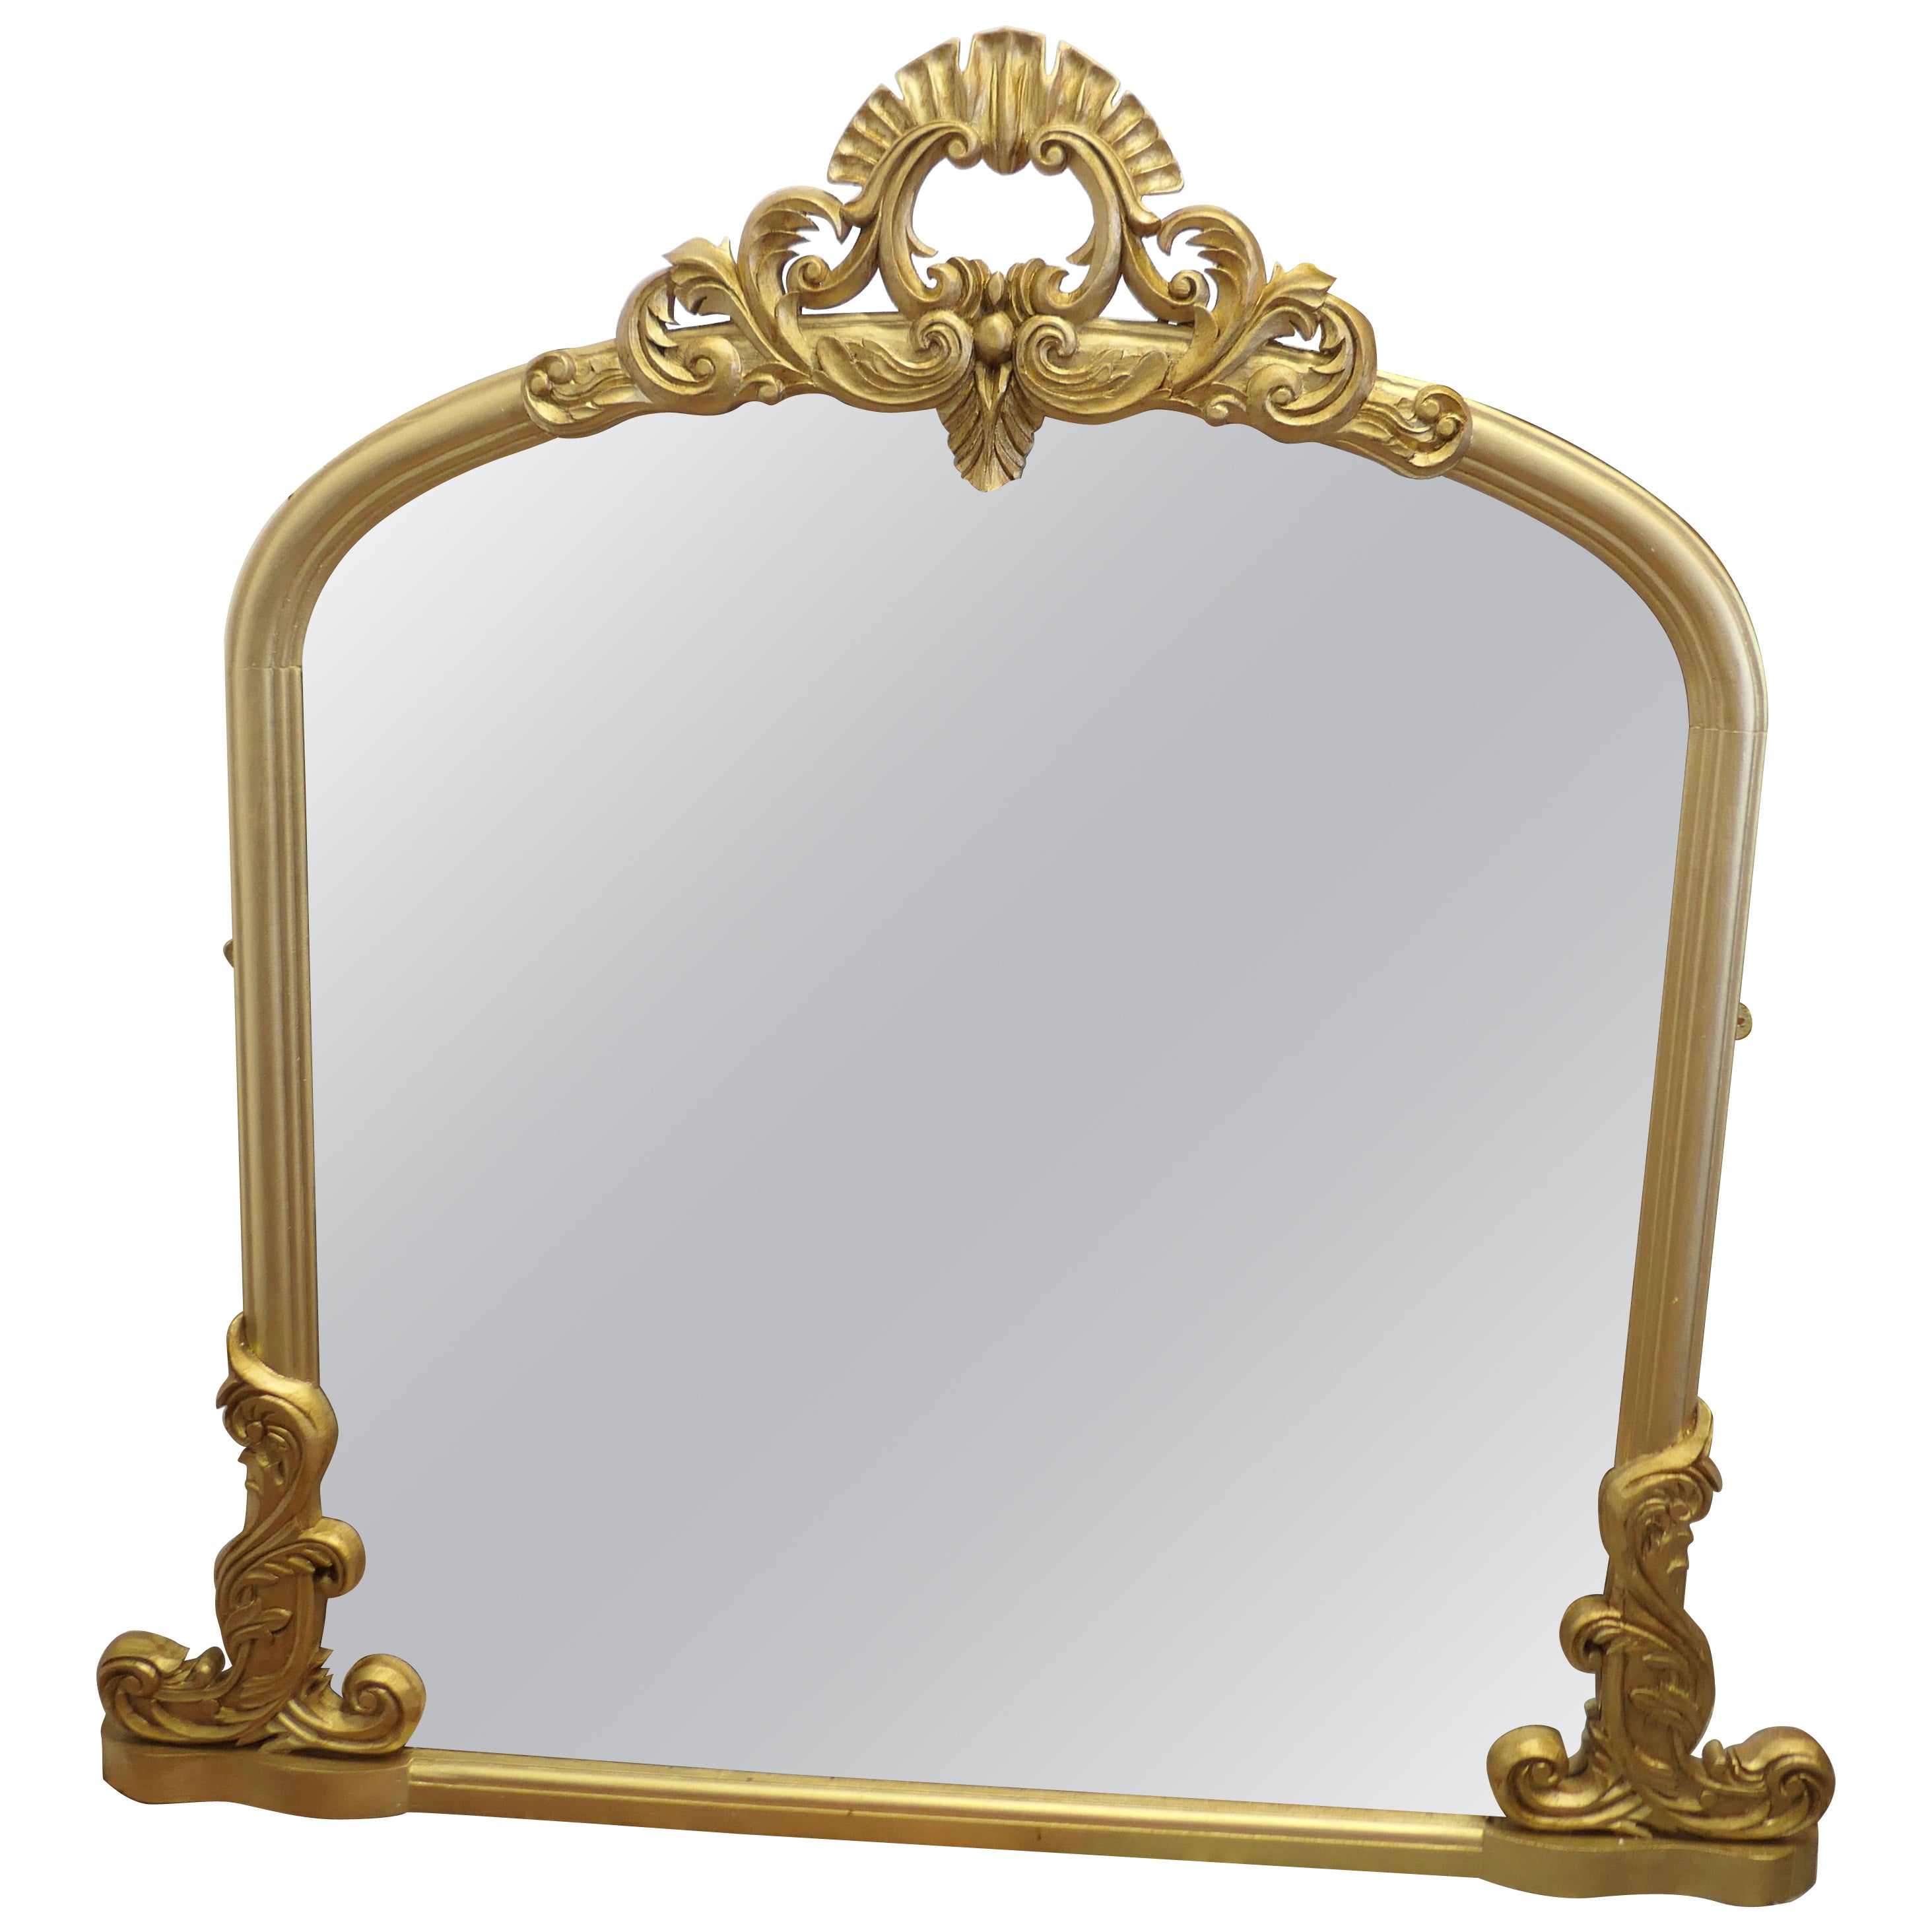 Grand miroir de style rococo doré en arc de cercle      en vente